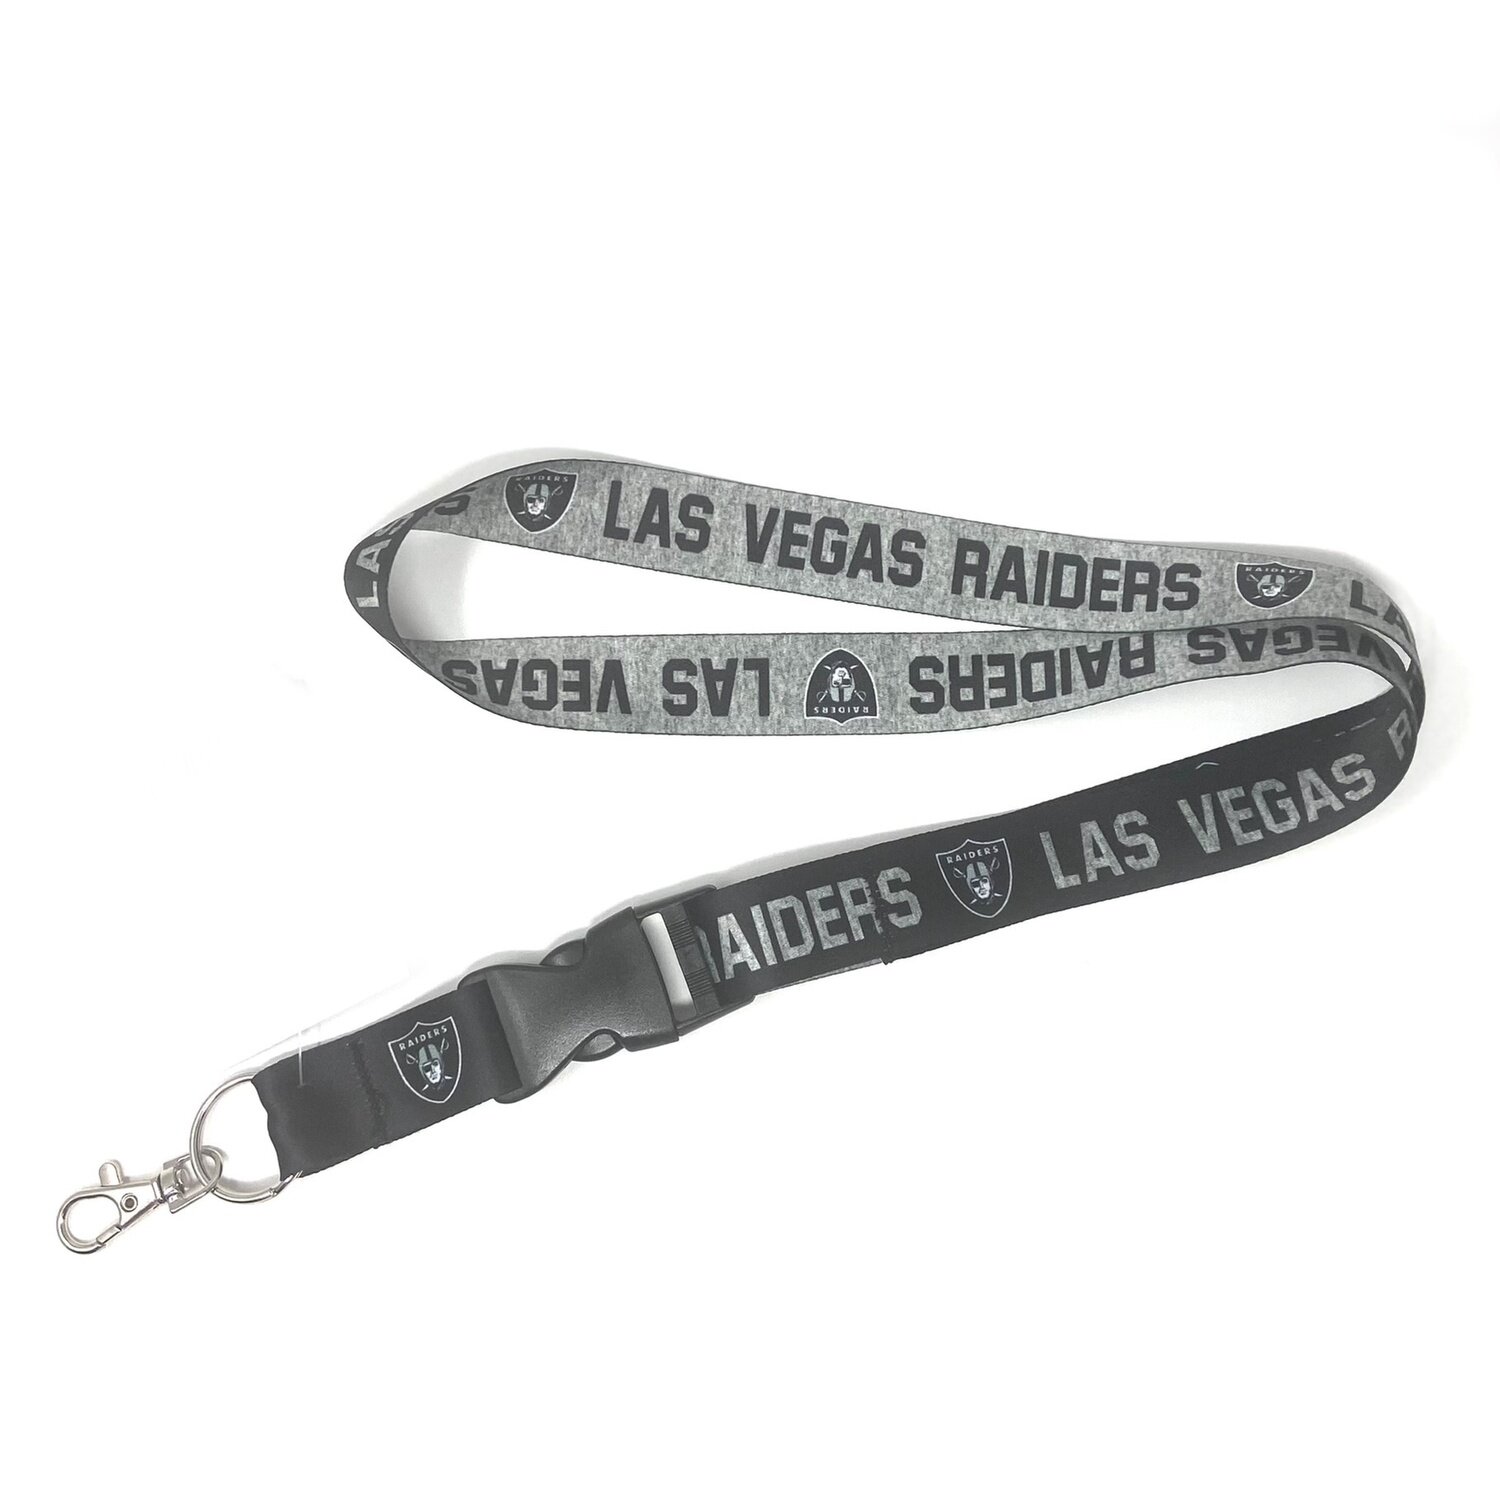 Las Vegas Raiders WinCraft Key Strap